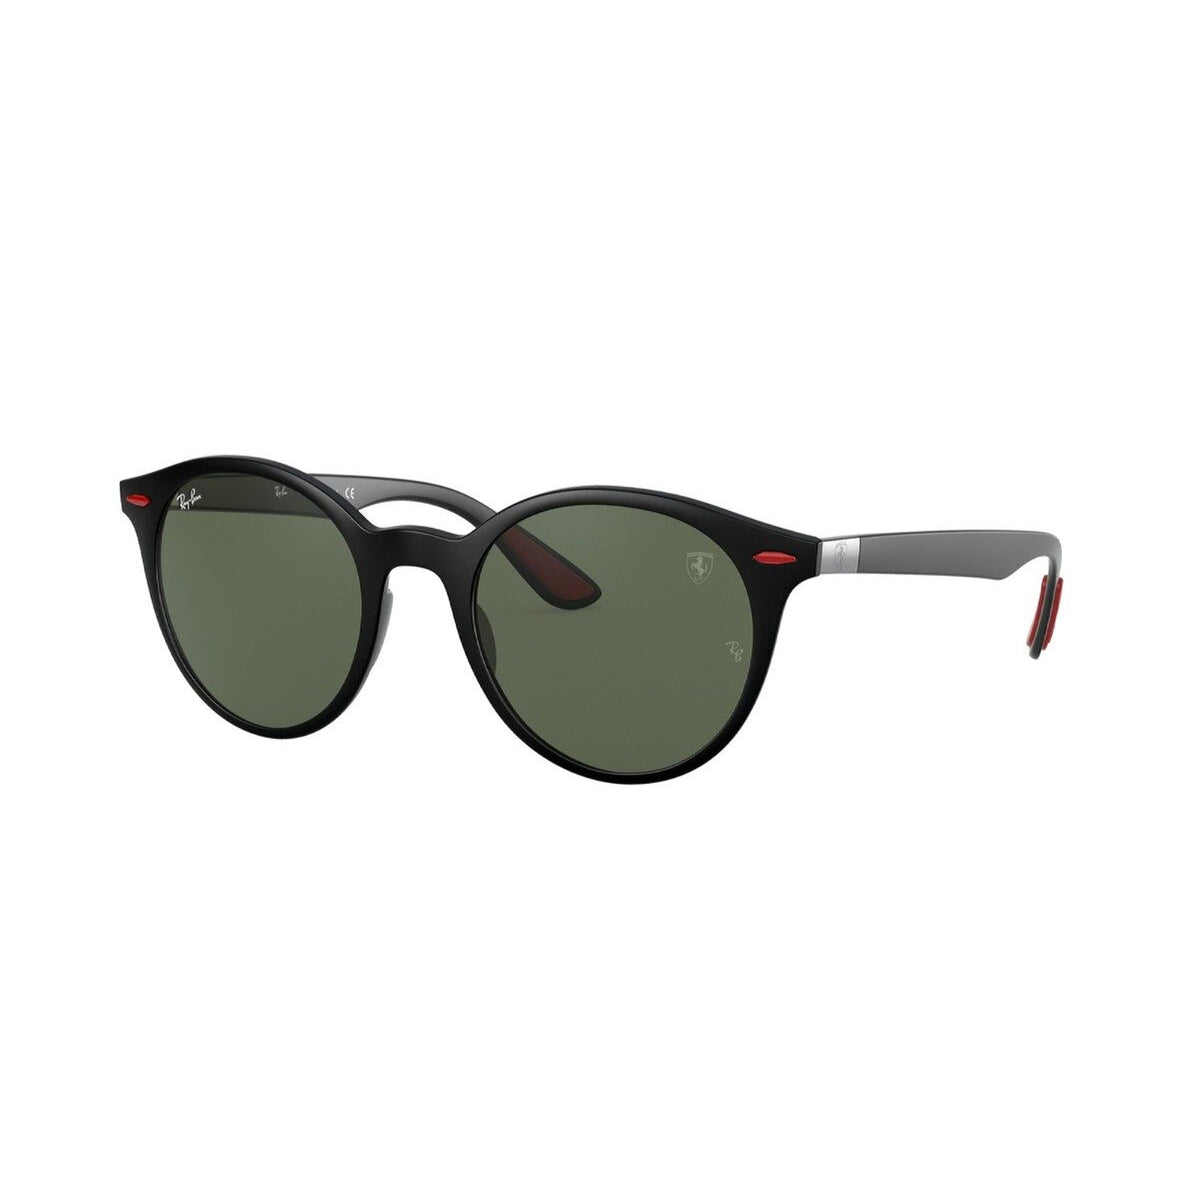 Ray-Ban Unisex Sunglasses  Black Dark Green Plastic Plastic  0RB4296M F60271 50